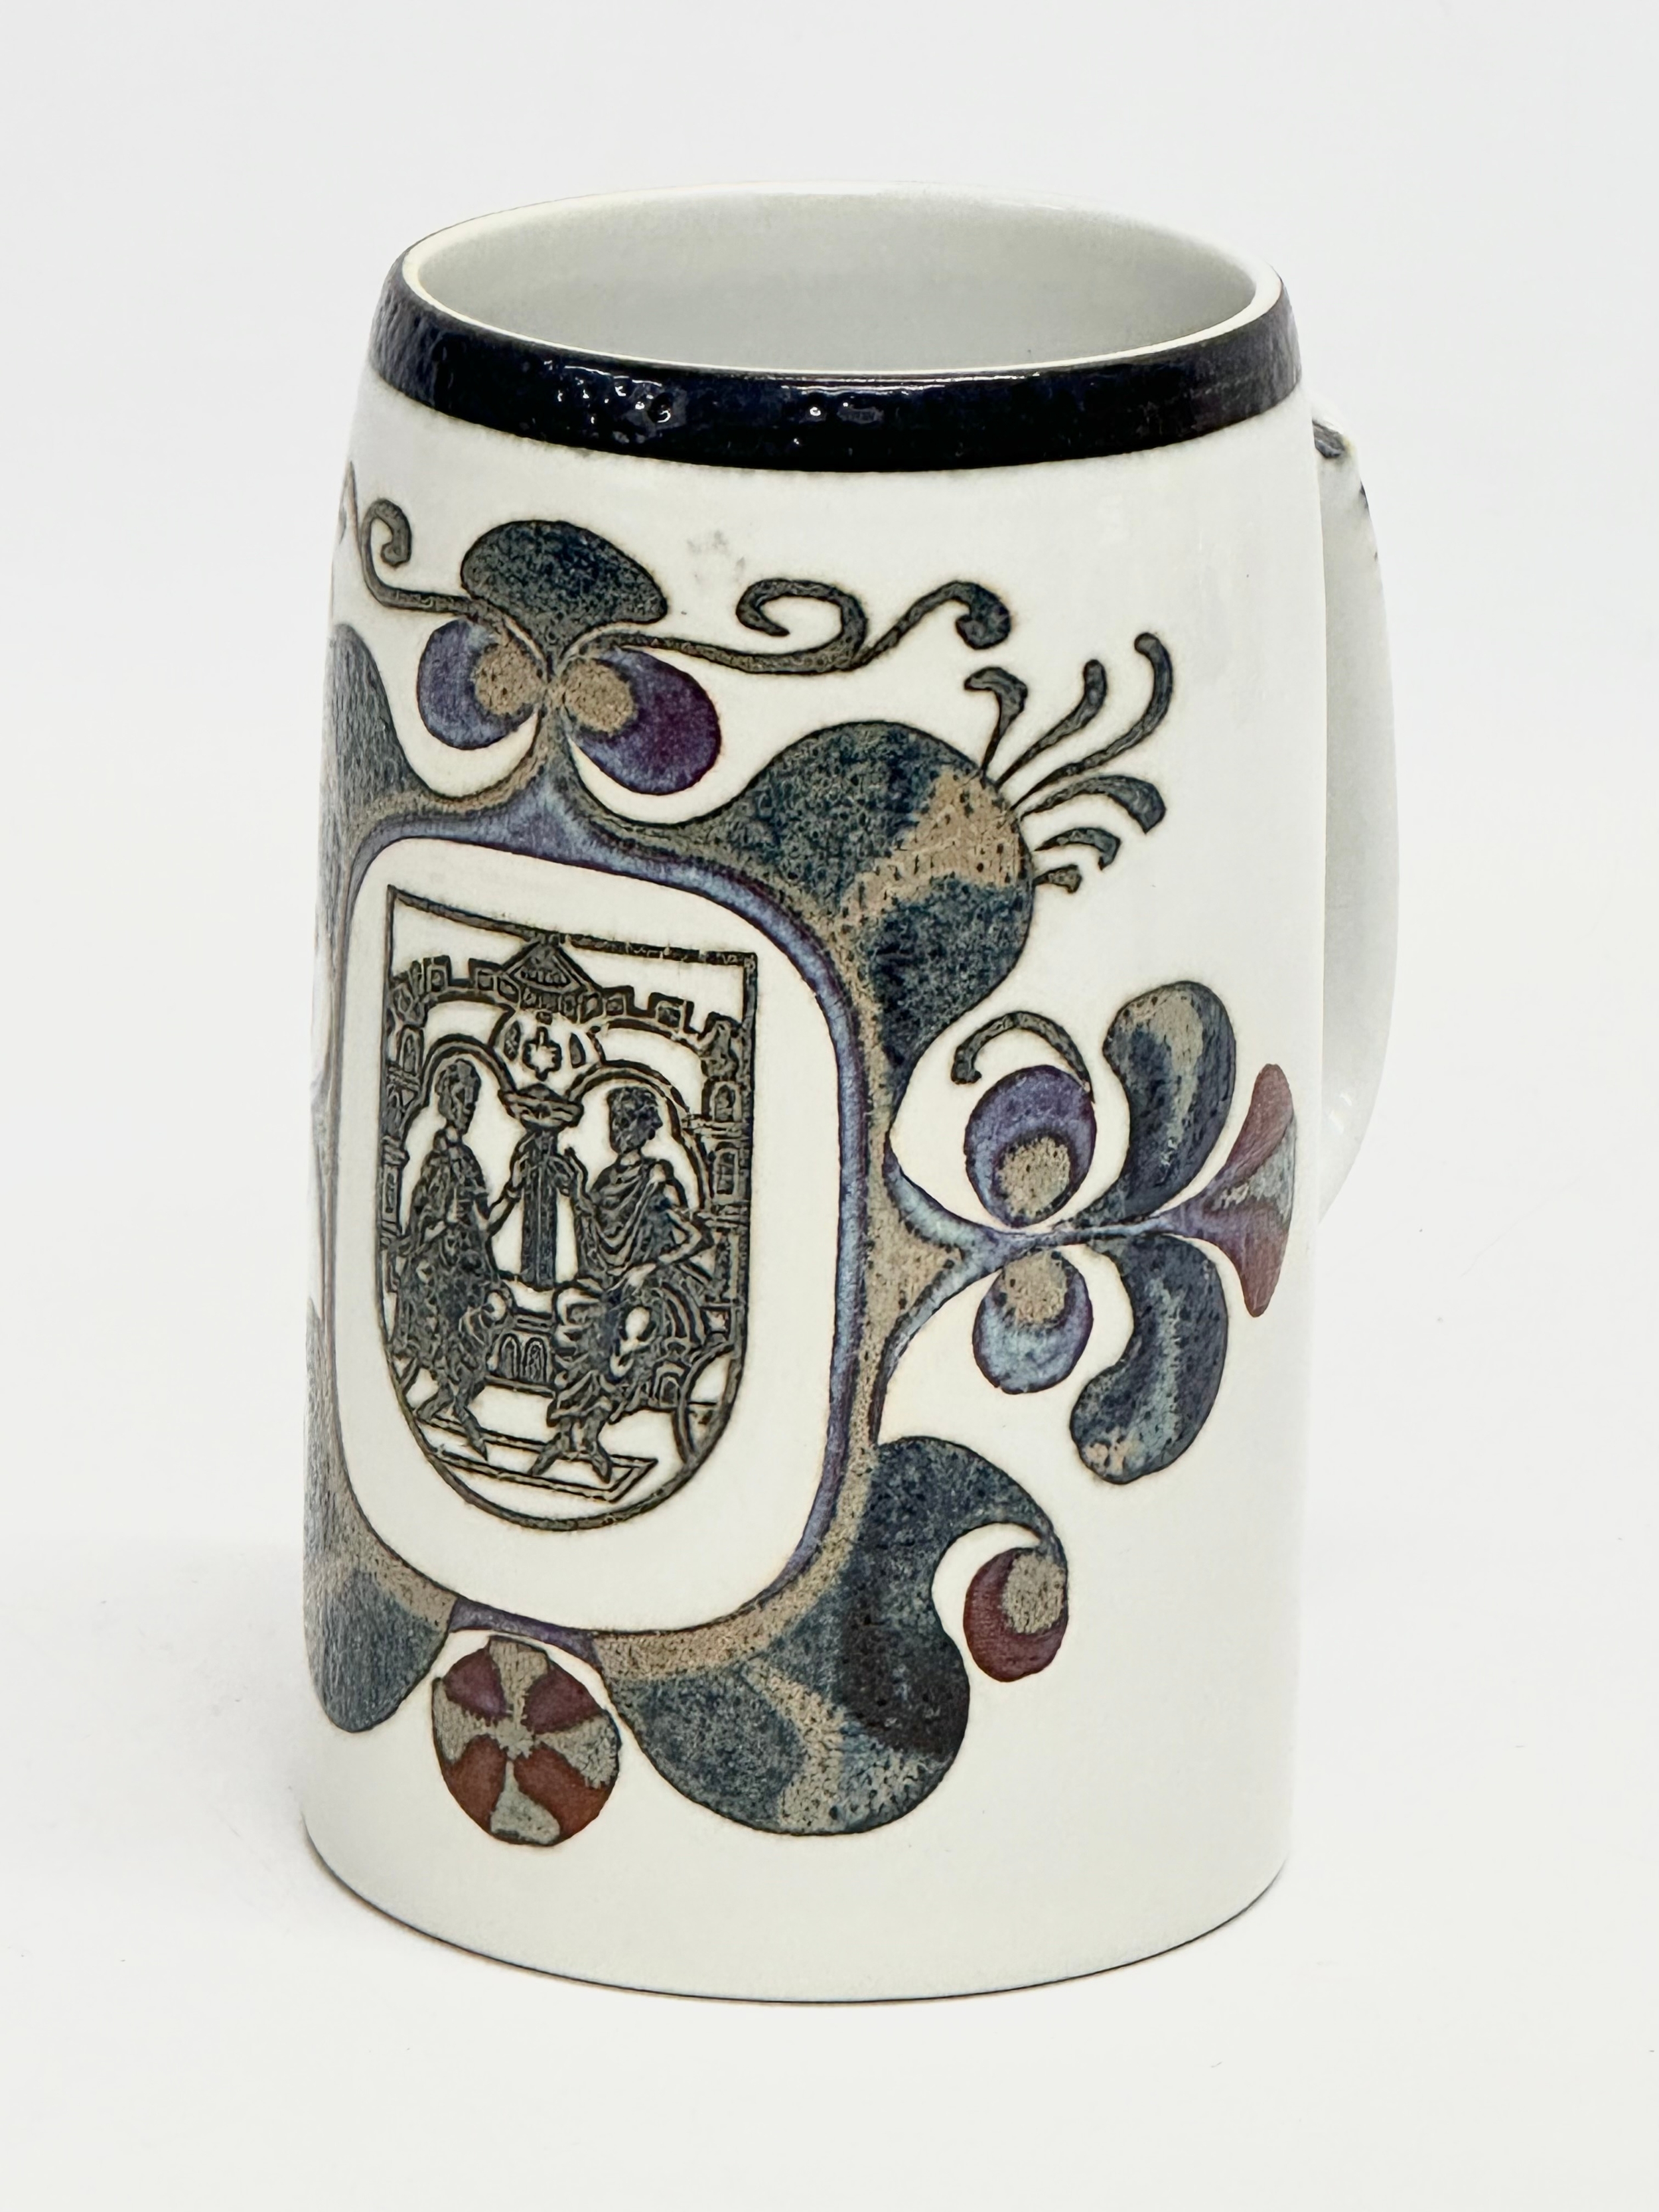 A Danish Mid Century Fajance mug designed by Nils Thorsson for Royal Copenhagen. Viborg Kruset